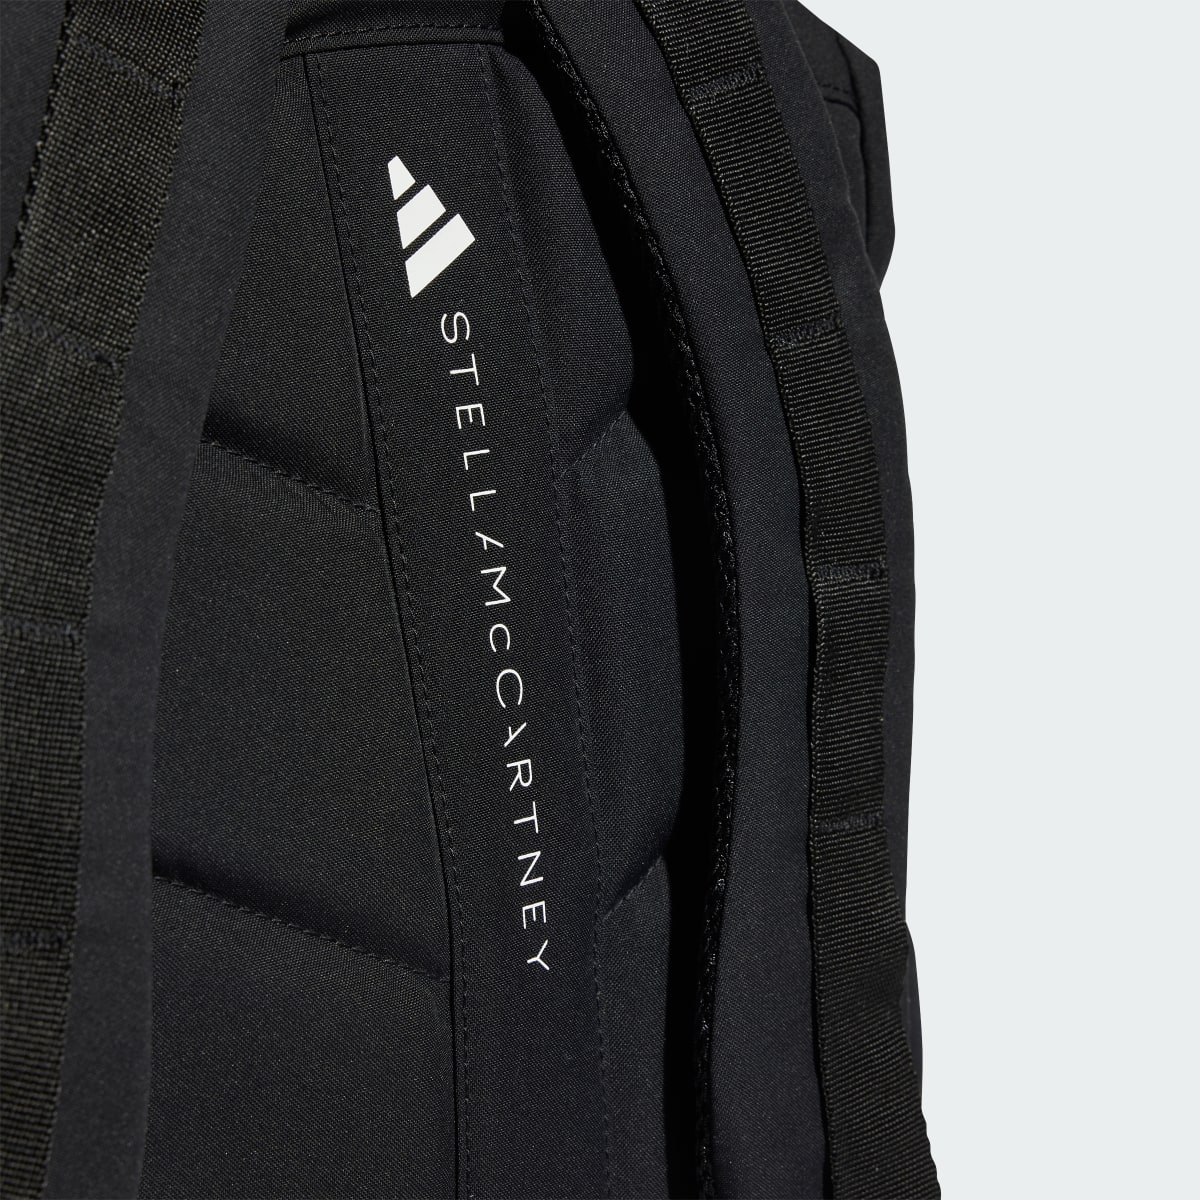 Adidas by Stella McCartney Backpack. 7